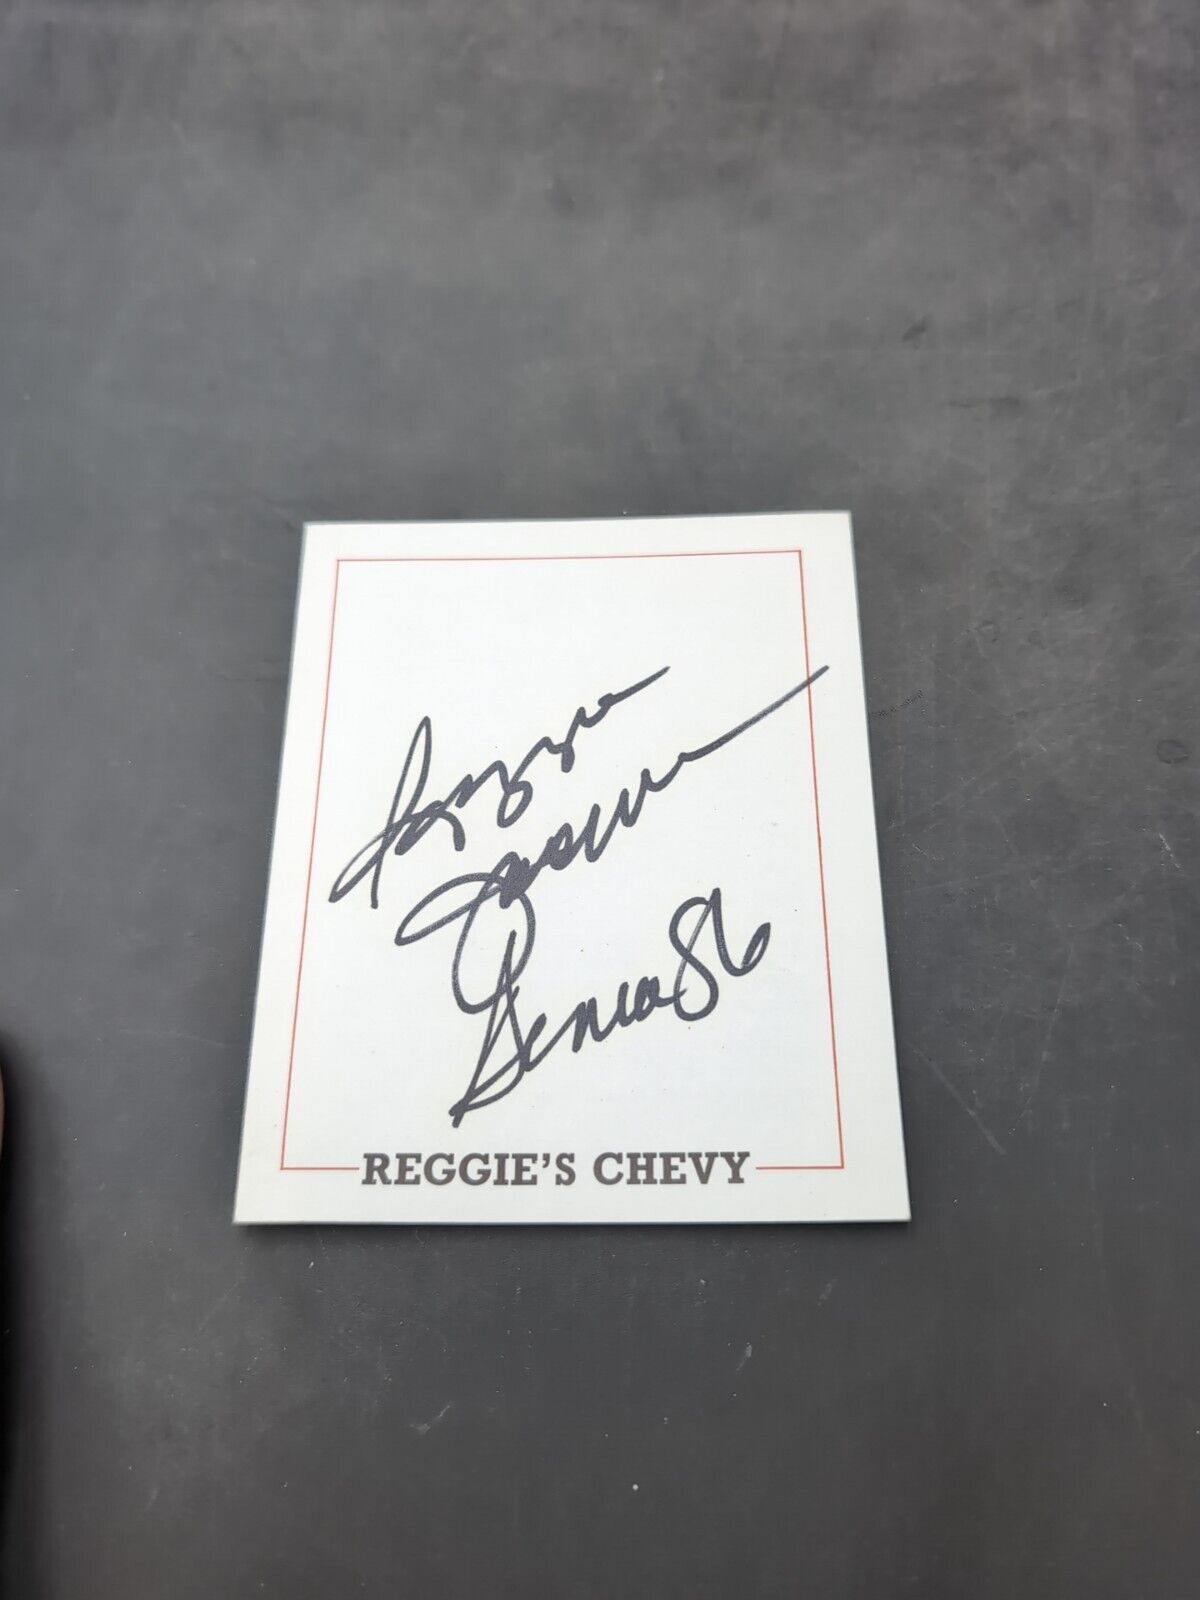 1986 Chevrolet Reggie Jackson Booklet With Signature